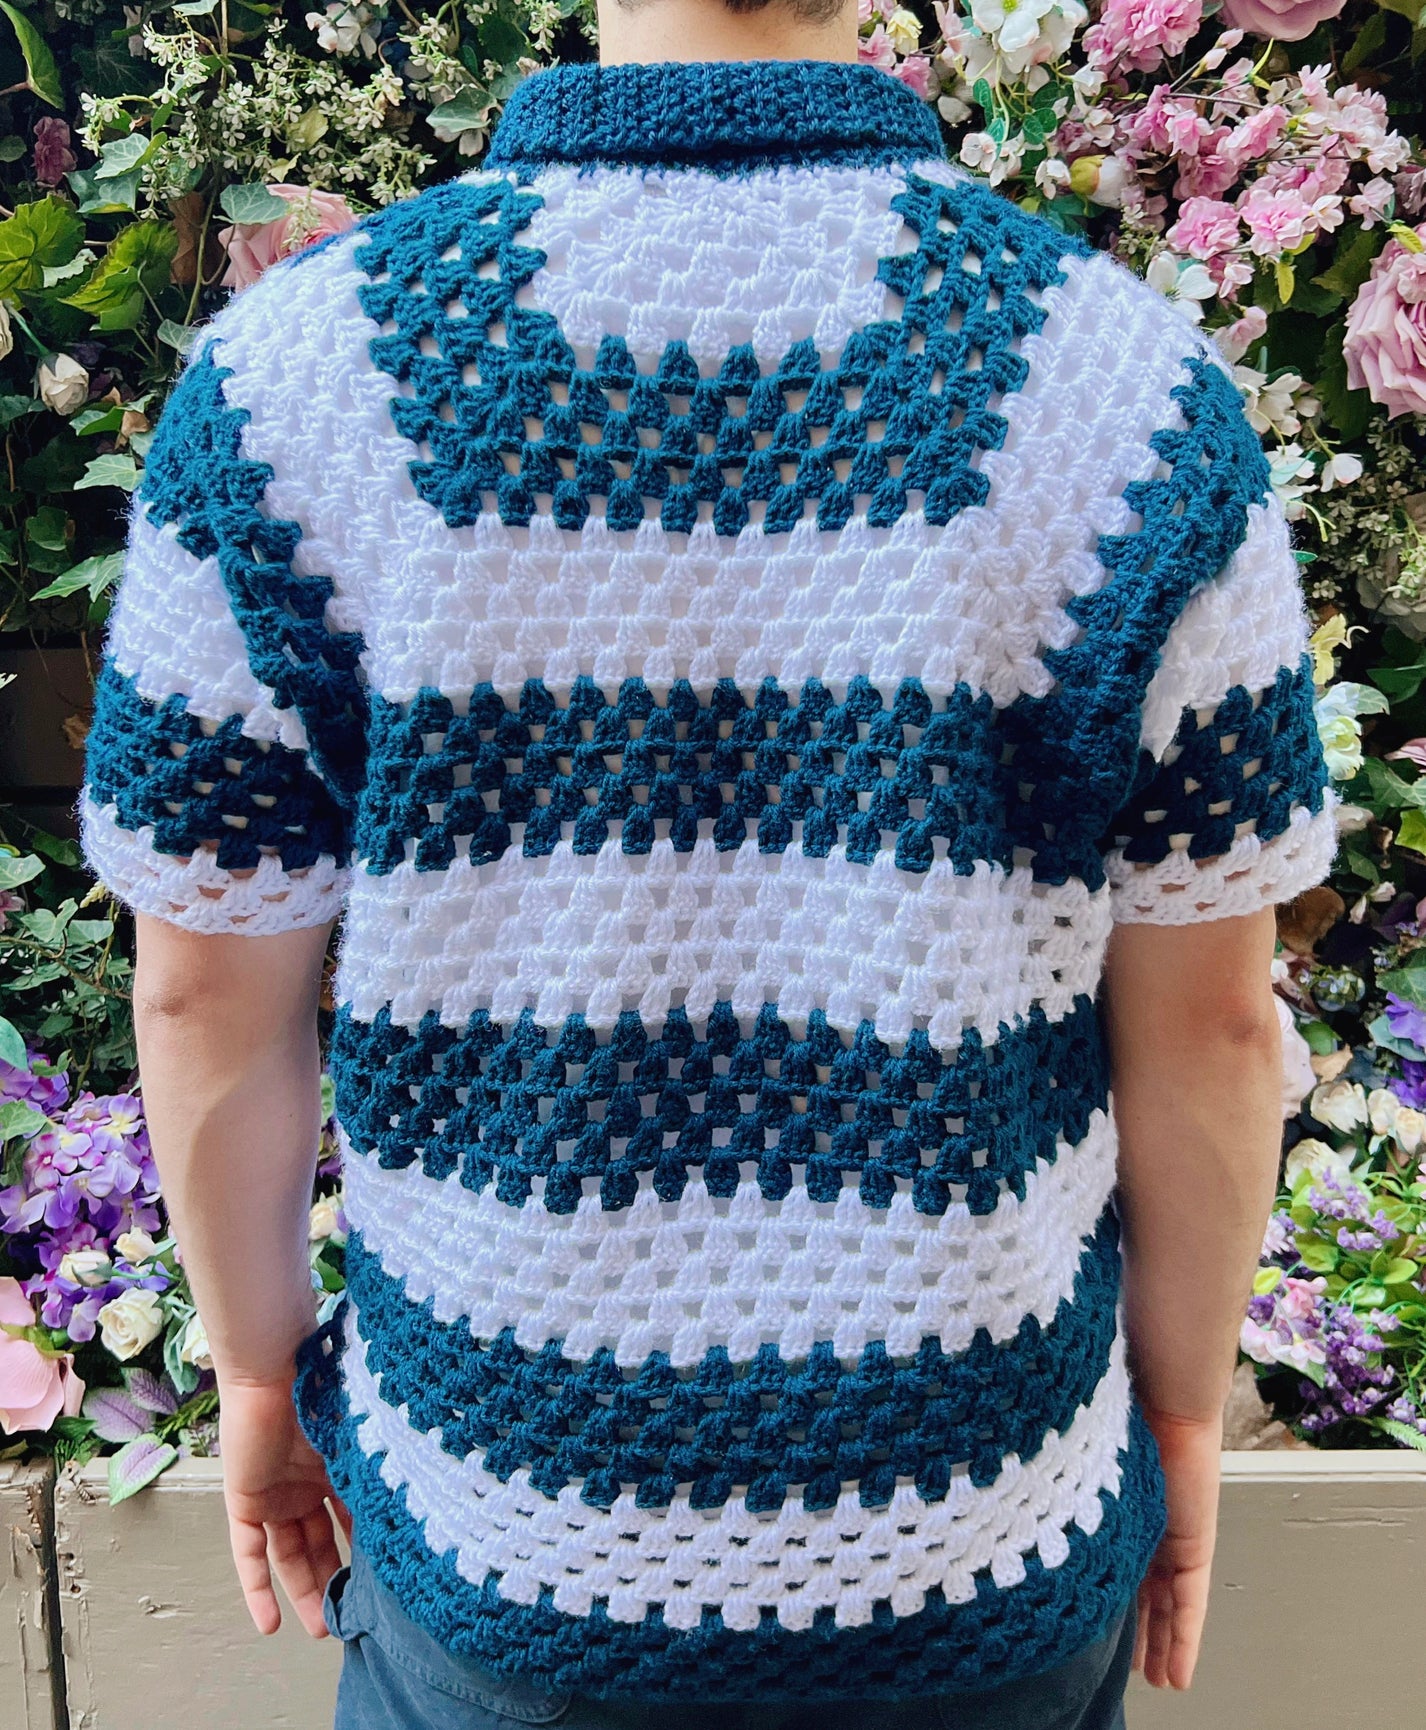 Denver Top Crochet Pattern – The Crocheting